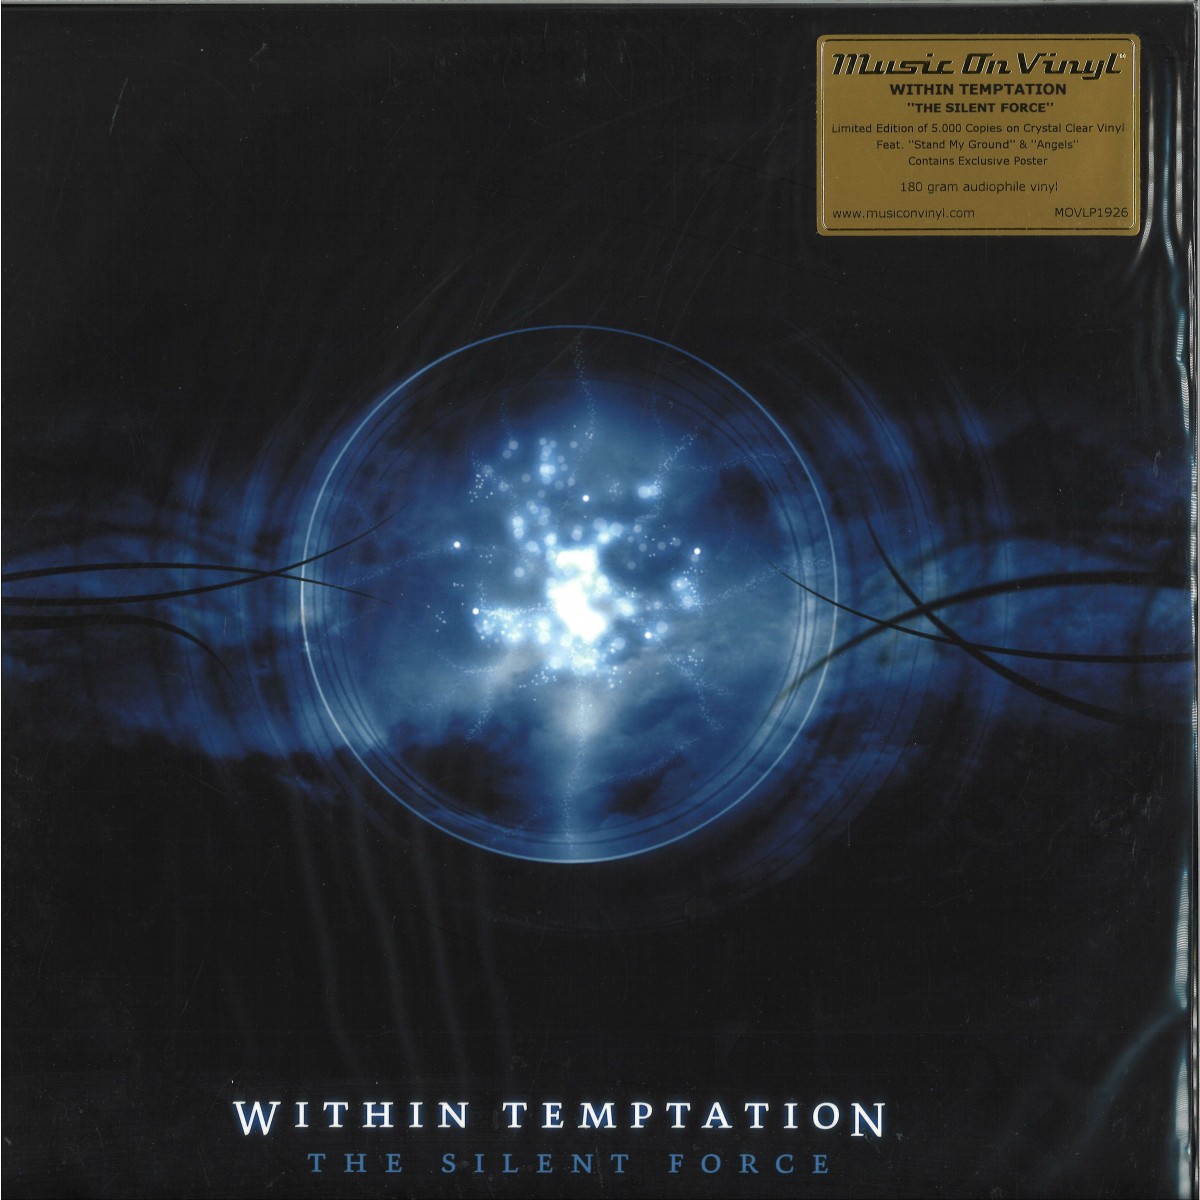 WITHIN TEMPTATION - THE SILENT FORCE / Music On Vinyl MOVLP1926 - Vinyl